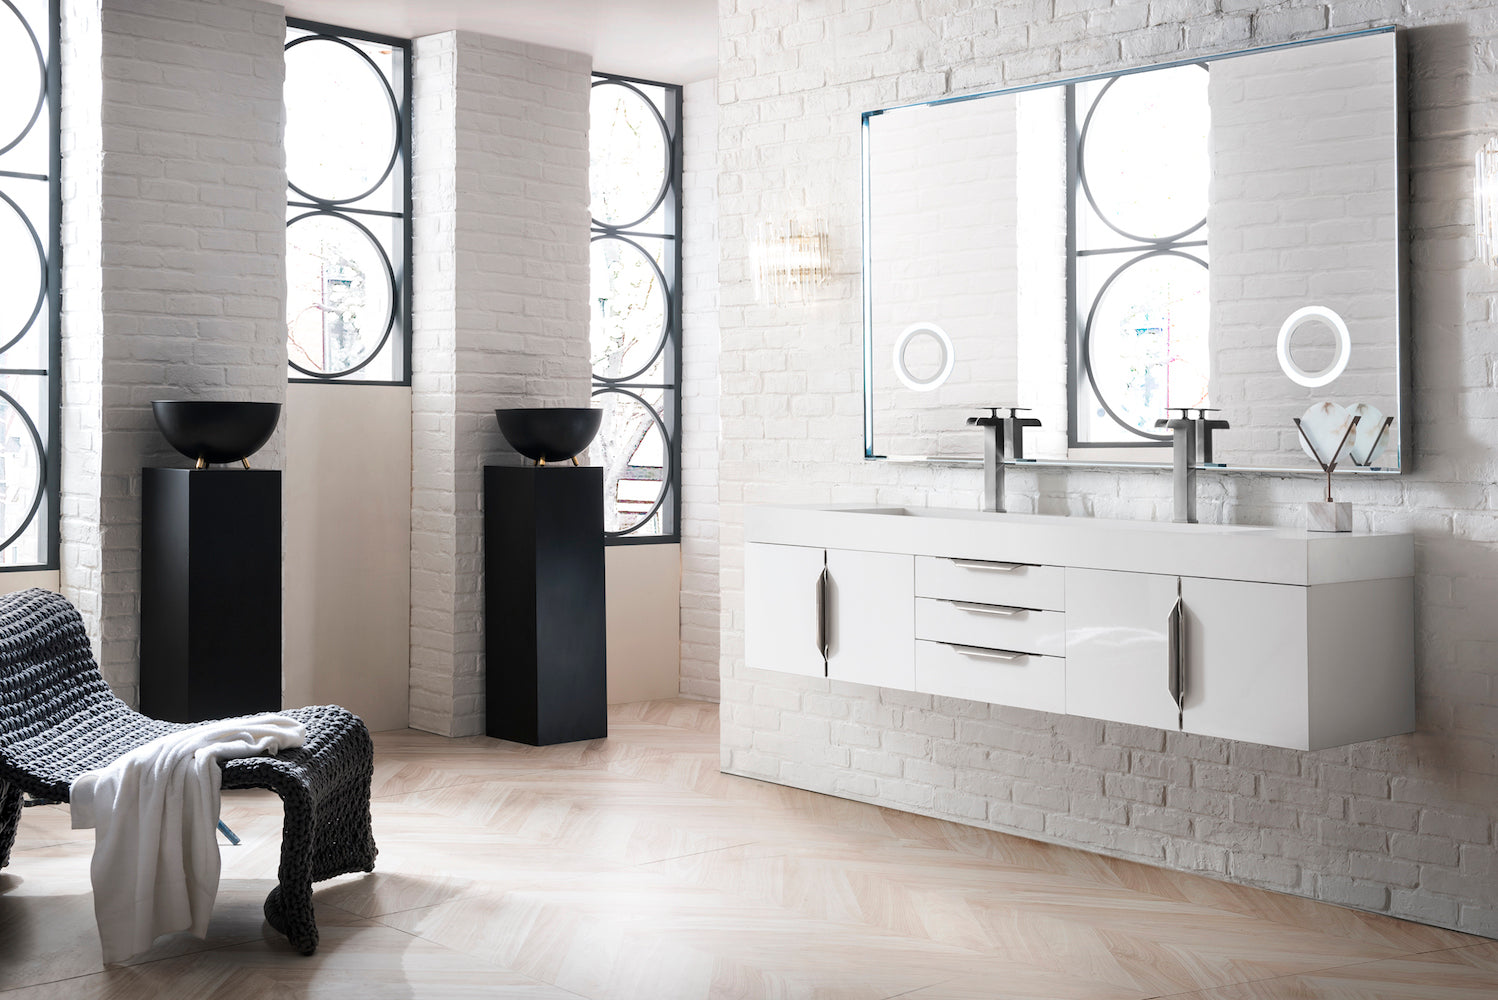 72" Mercer Island Double Sink Bathroom Vanity, Glossy White w/ Brushed Nickel